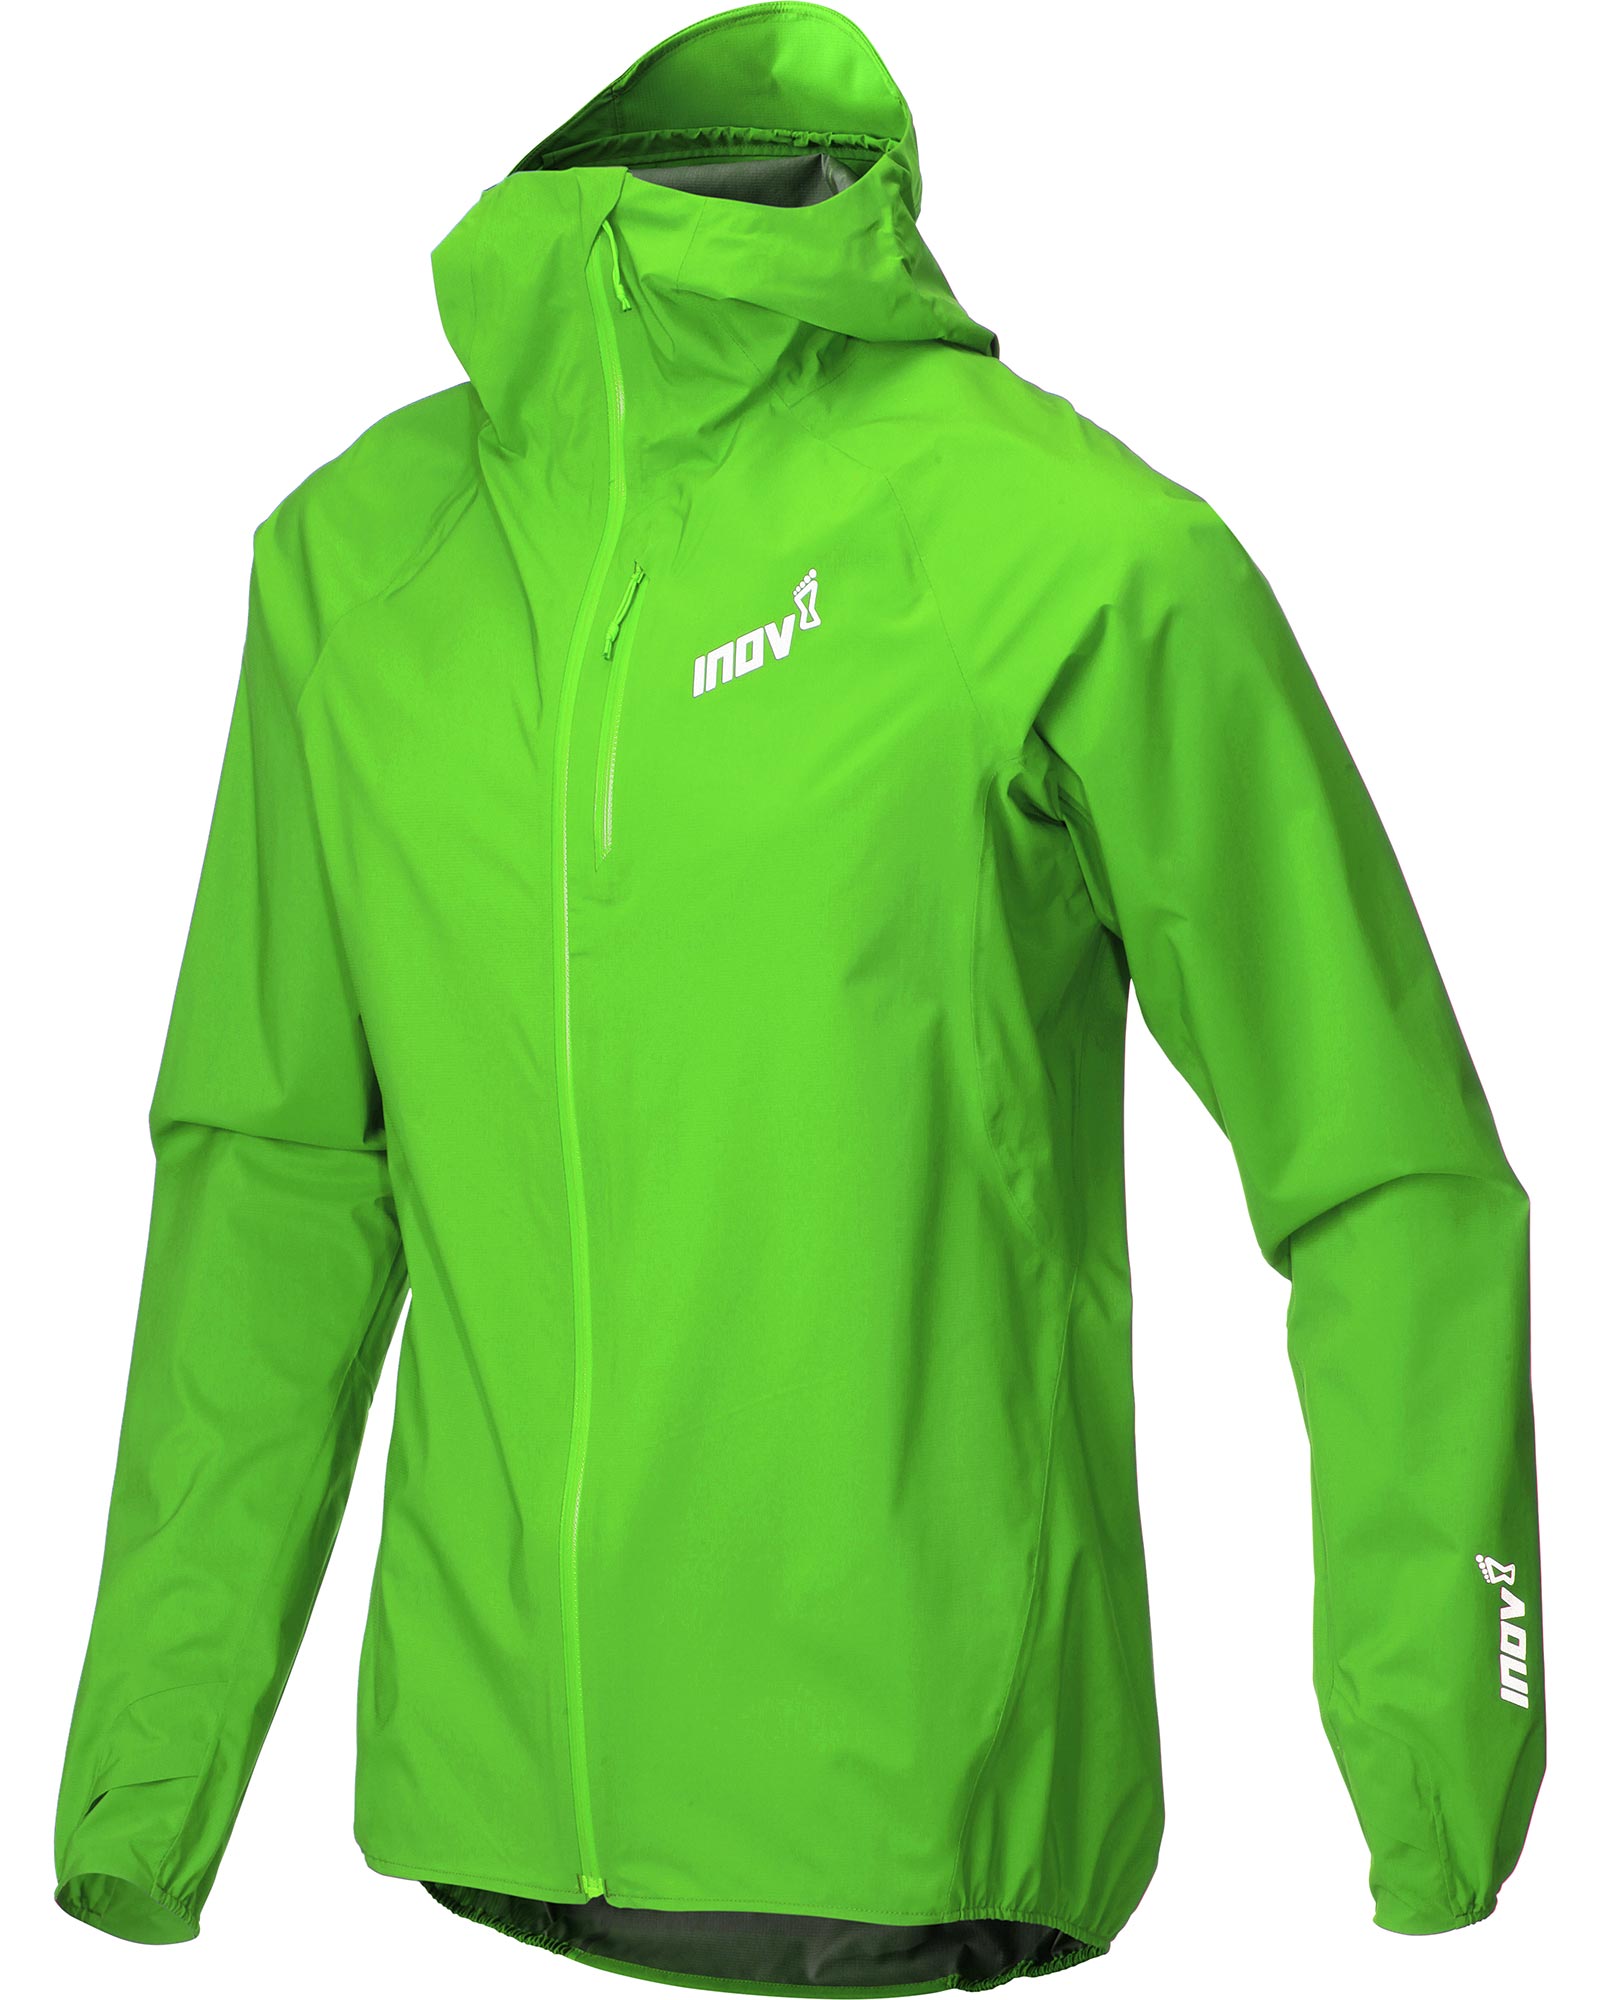 Inov 8 Full Zip Stormshell Men’s Jacket - Green M